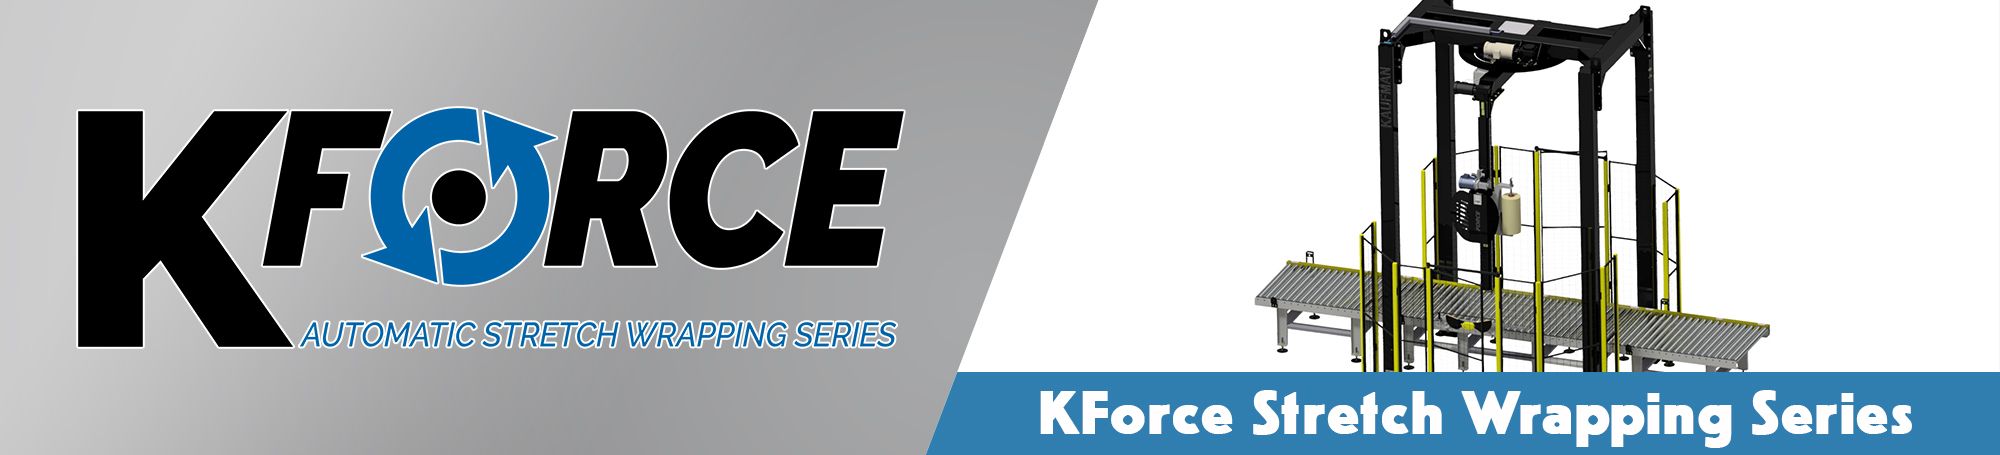 KForce Wrapper Group.jpg